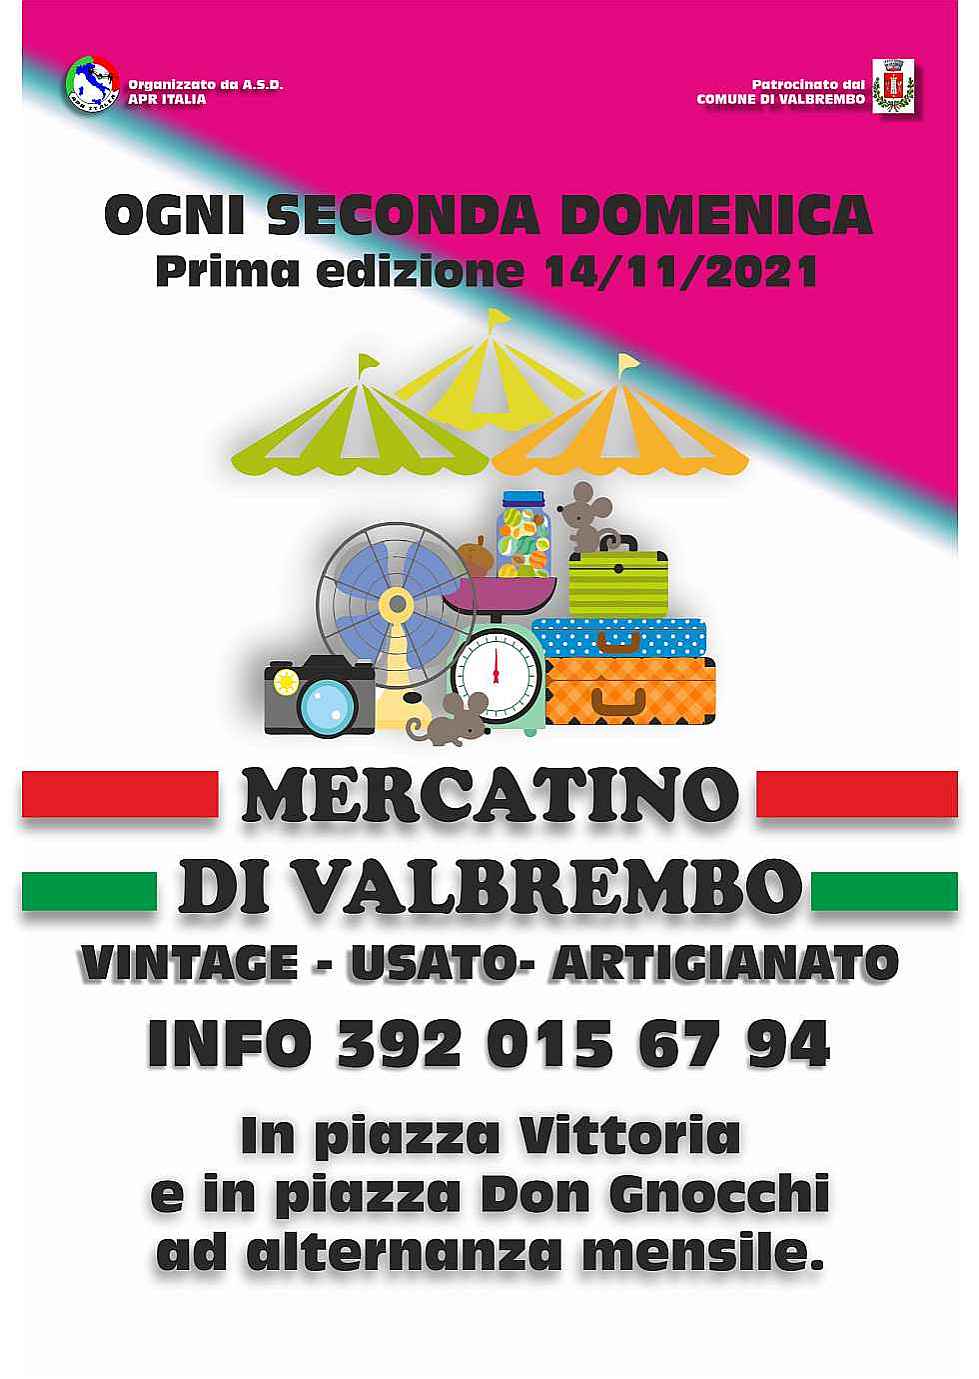 Valbrembo (BG)
"Mercatino Vintage - Usato - Artigianato"
Ogni 2^ Domenica del mese